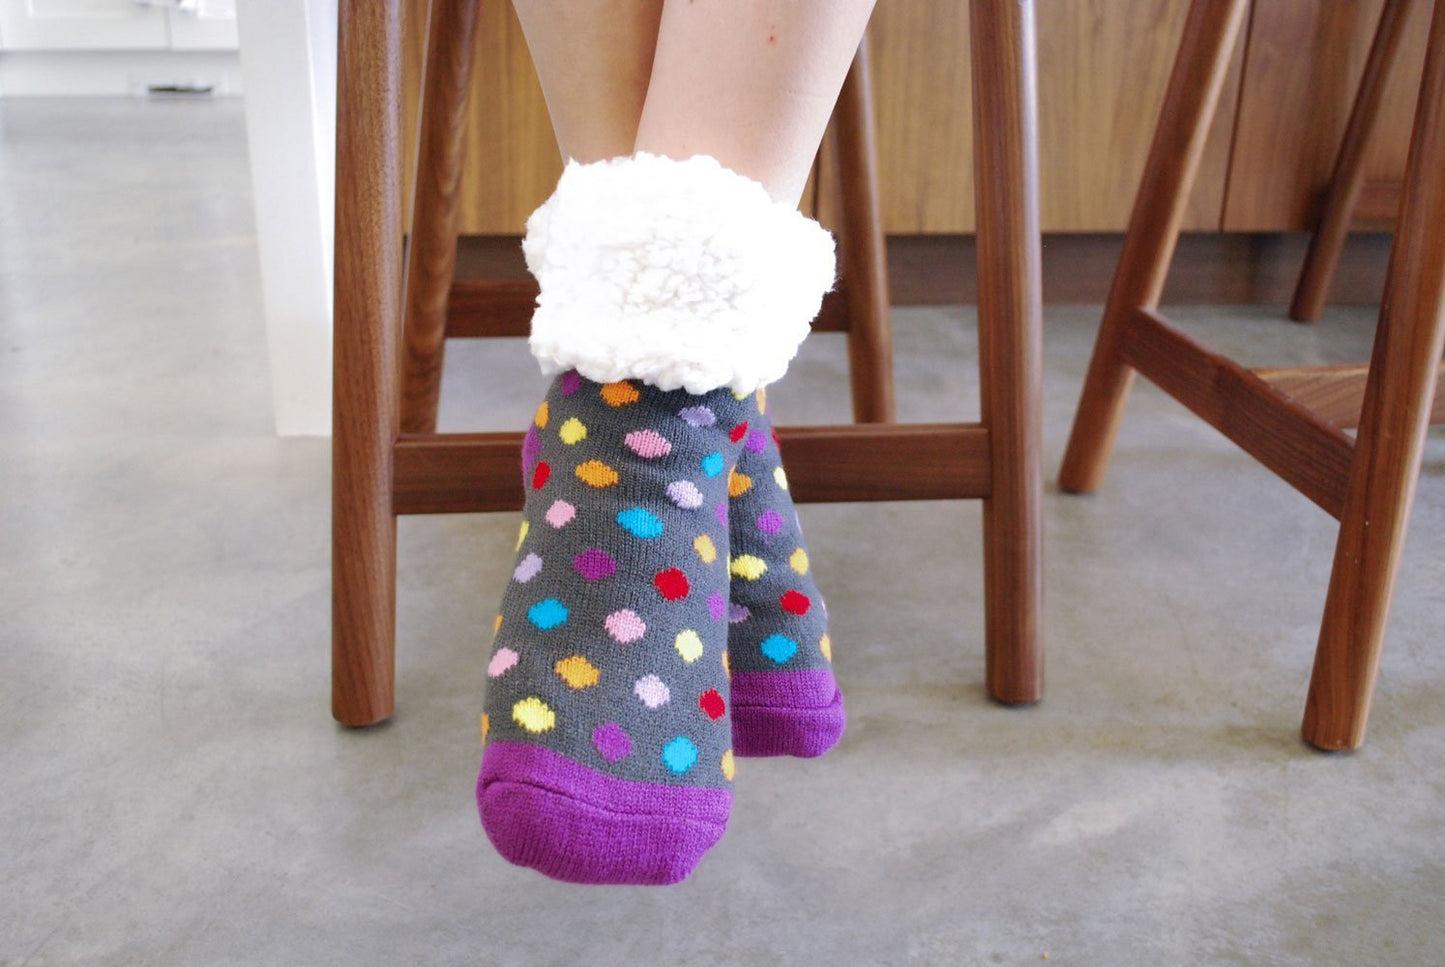 Pudus Cozy Winter Slipper Socks for Women and Men with Non-Slip Grippers and Faux Fur Sherpa Fleece - Adult Regular Fuzzy Socks Polka Dot Multi - Classic Slipper Sock